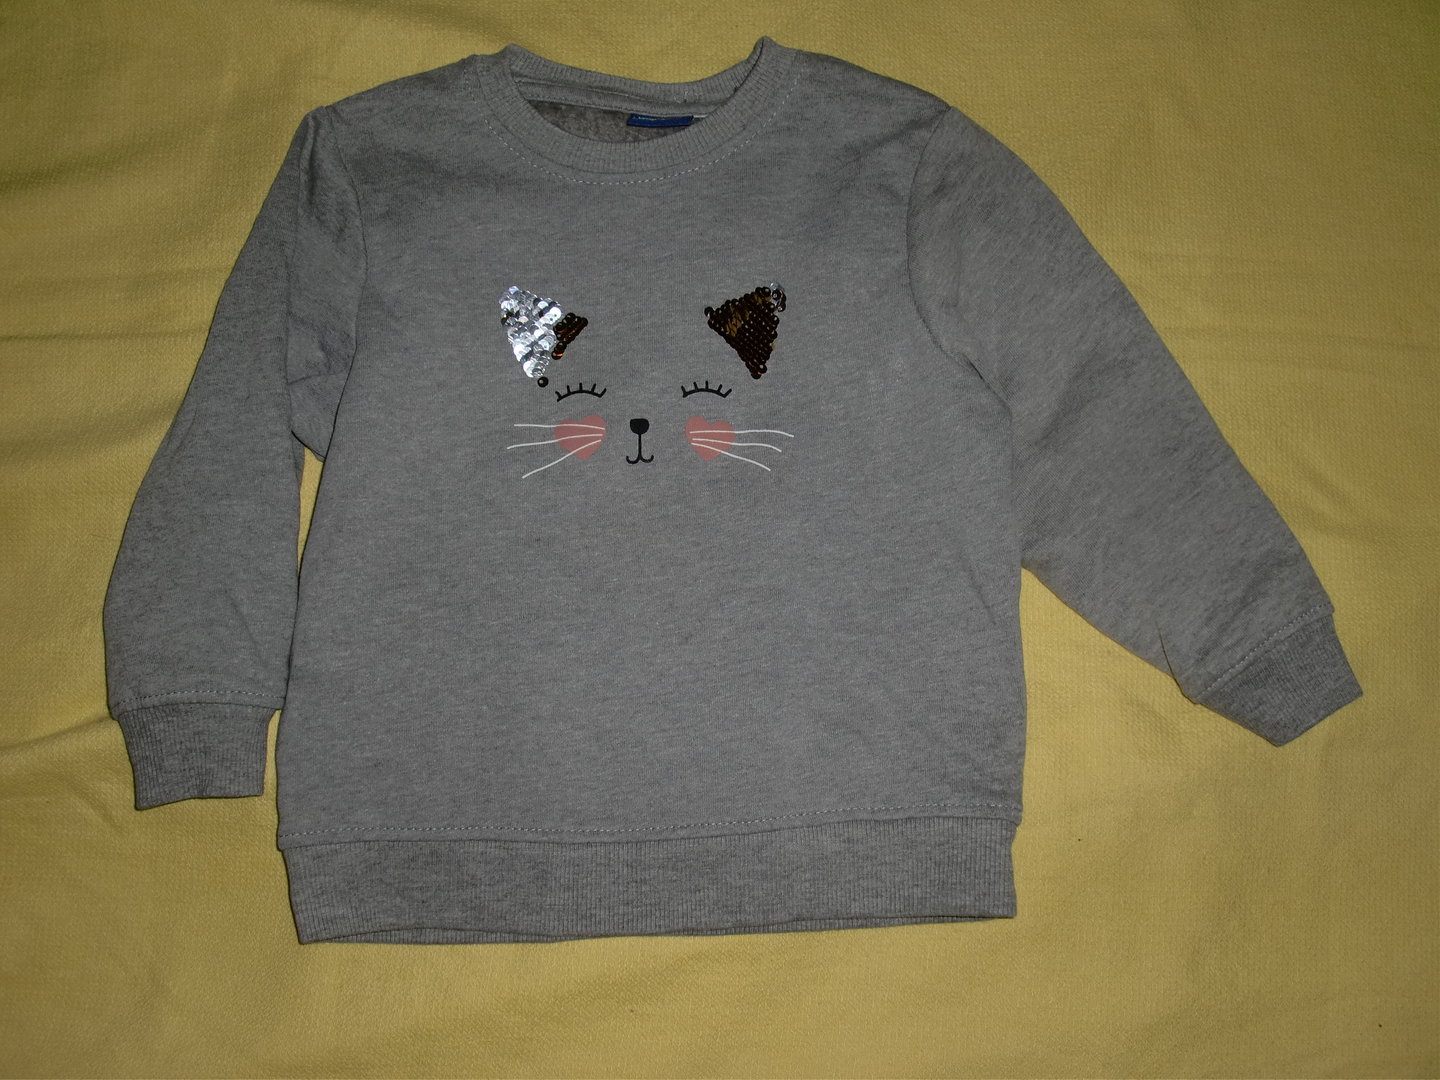 lupilu Sweater,Pullover,Gr.98,kuschlig angeraut